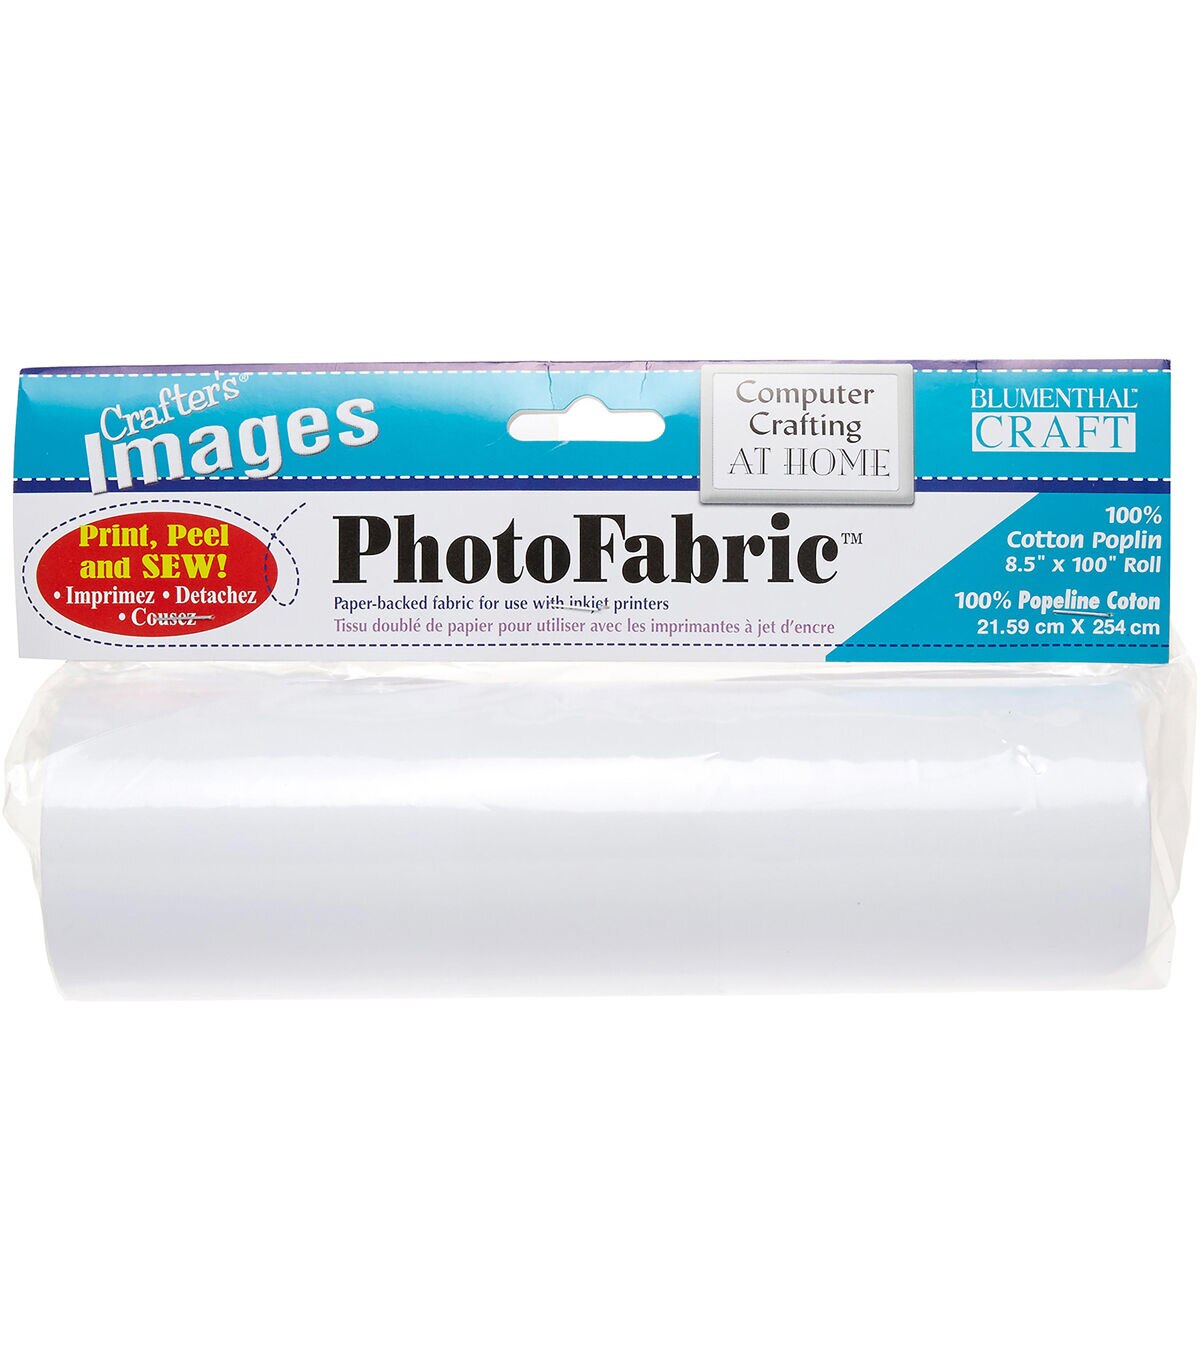 PhotoFabric Cotton Poplin Fabric Sheets 5 sheets 